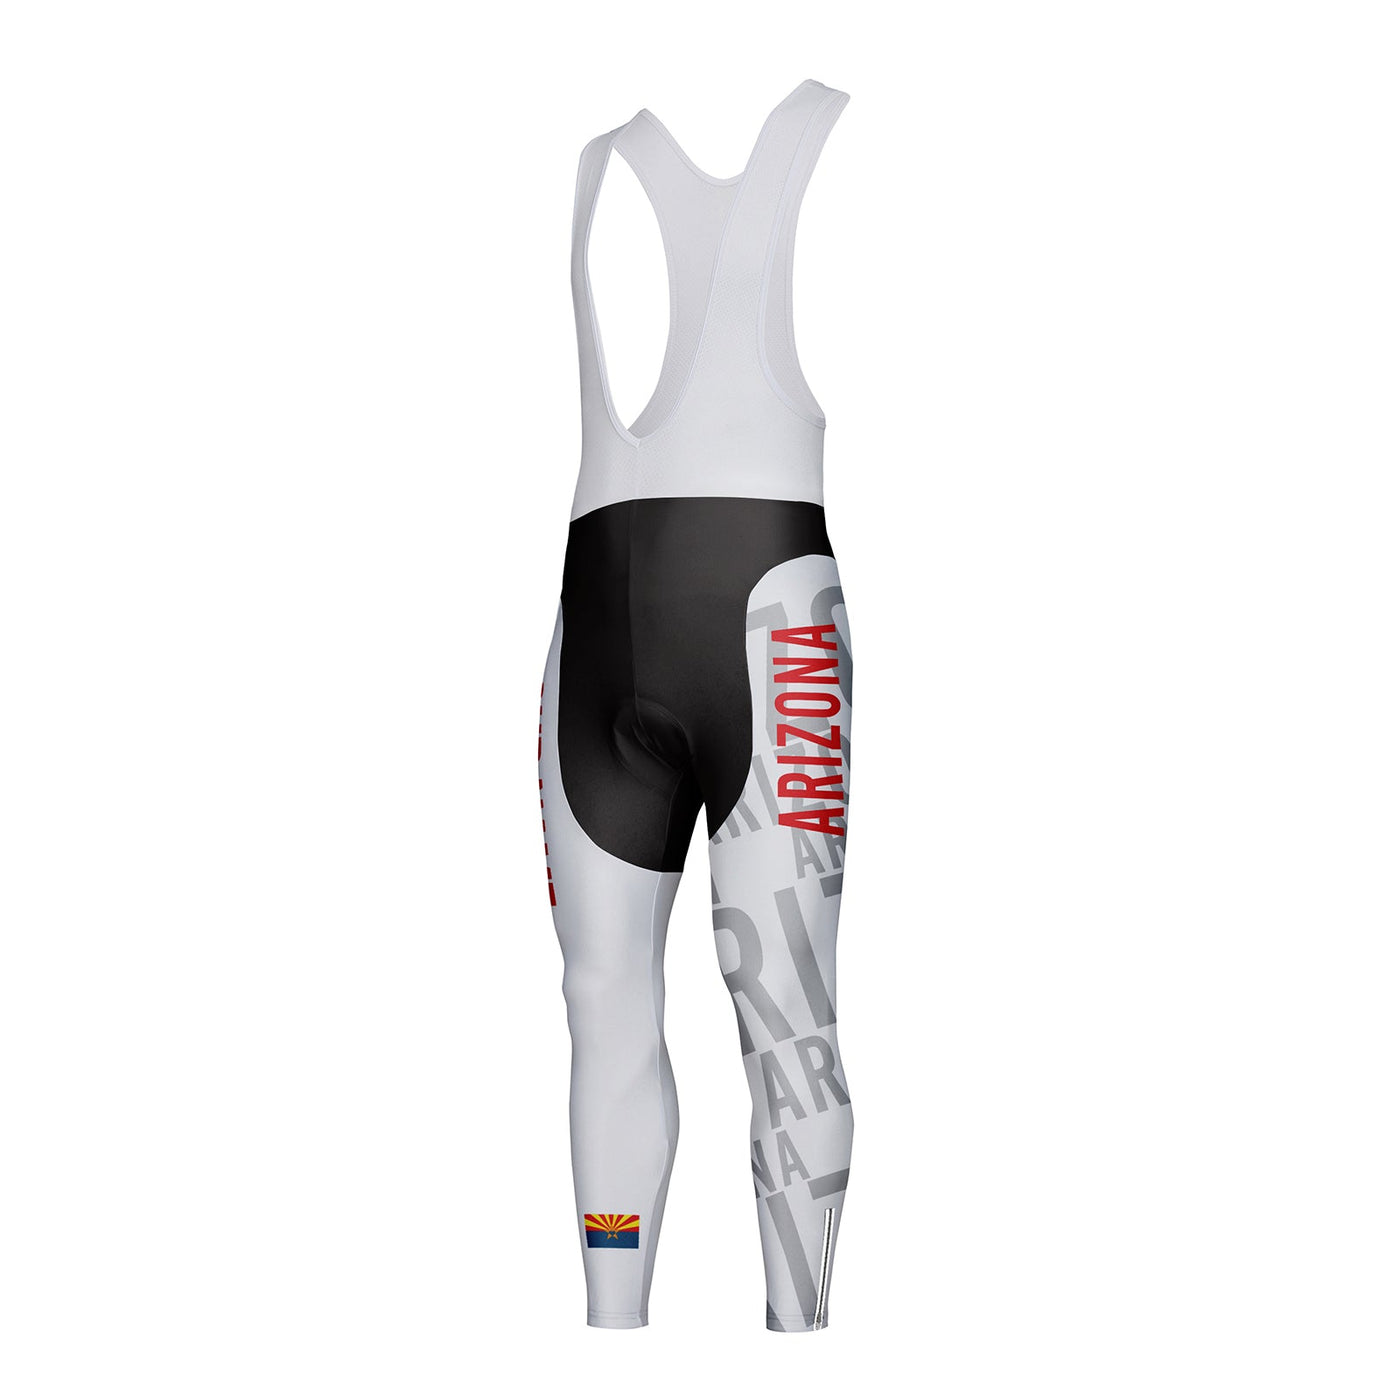 Customized Arizona Unisex Thermal Fleece Cycling Bib Tights Long Pants